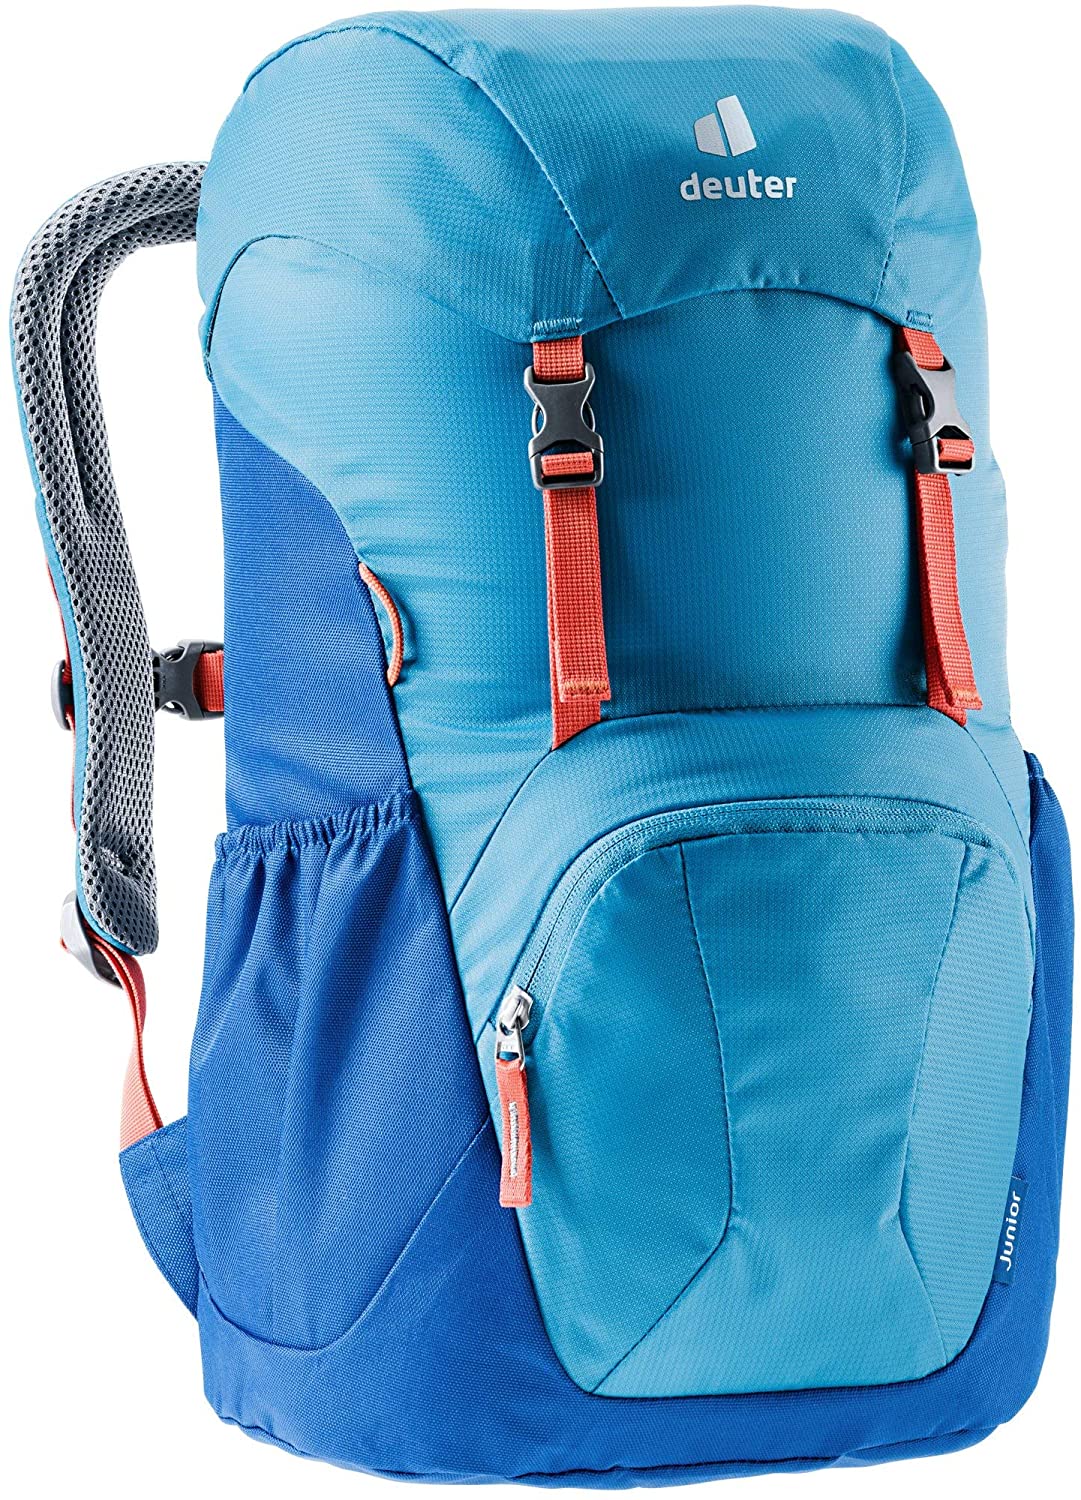 Deuter Junior 18L Children's Backpack in Azure/Lapis